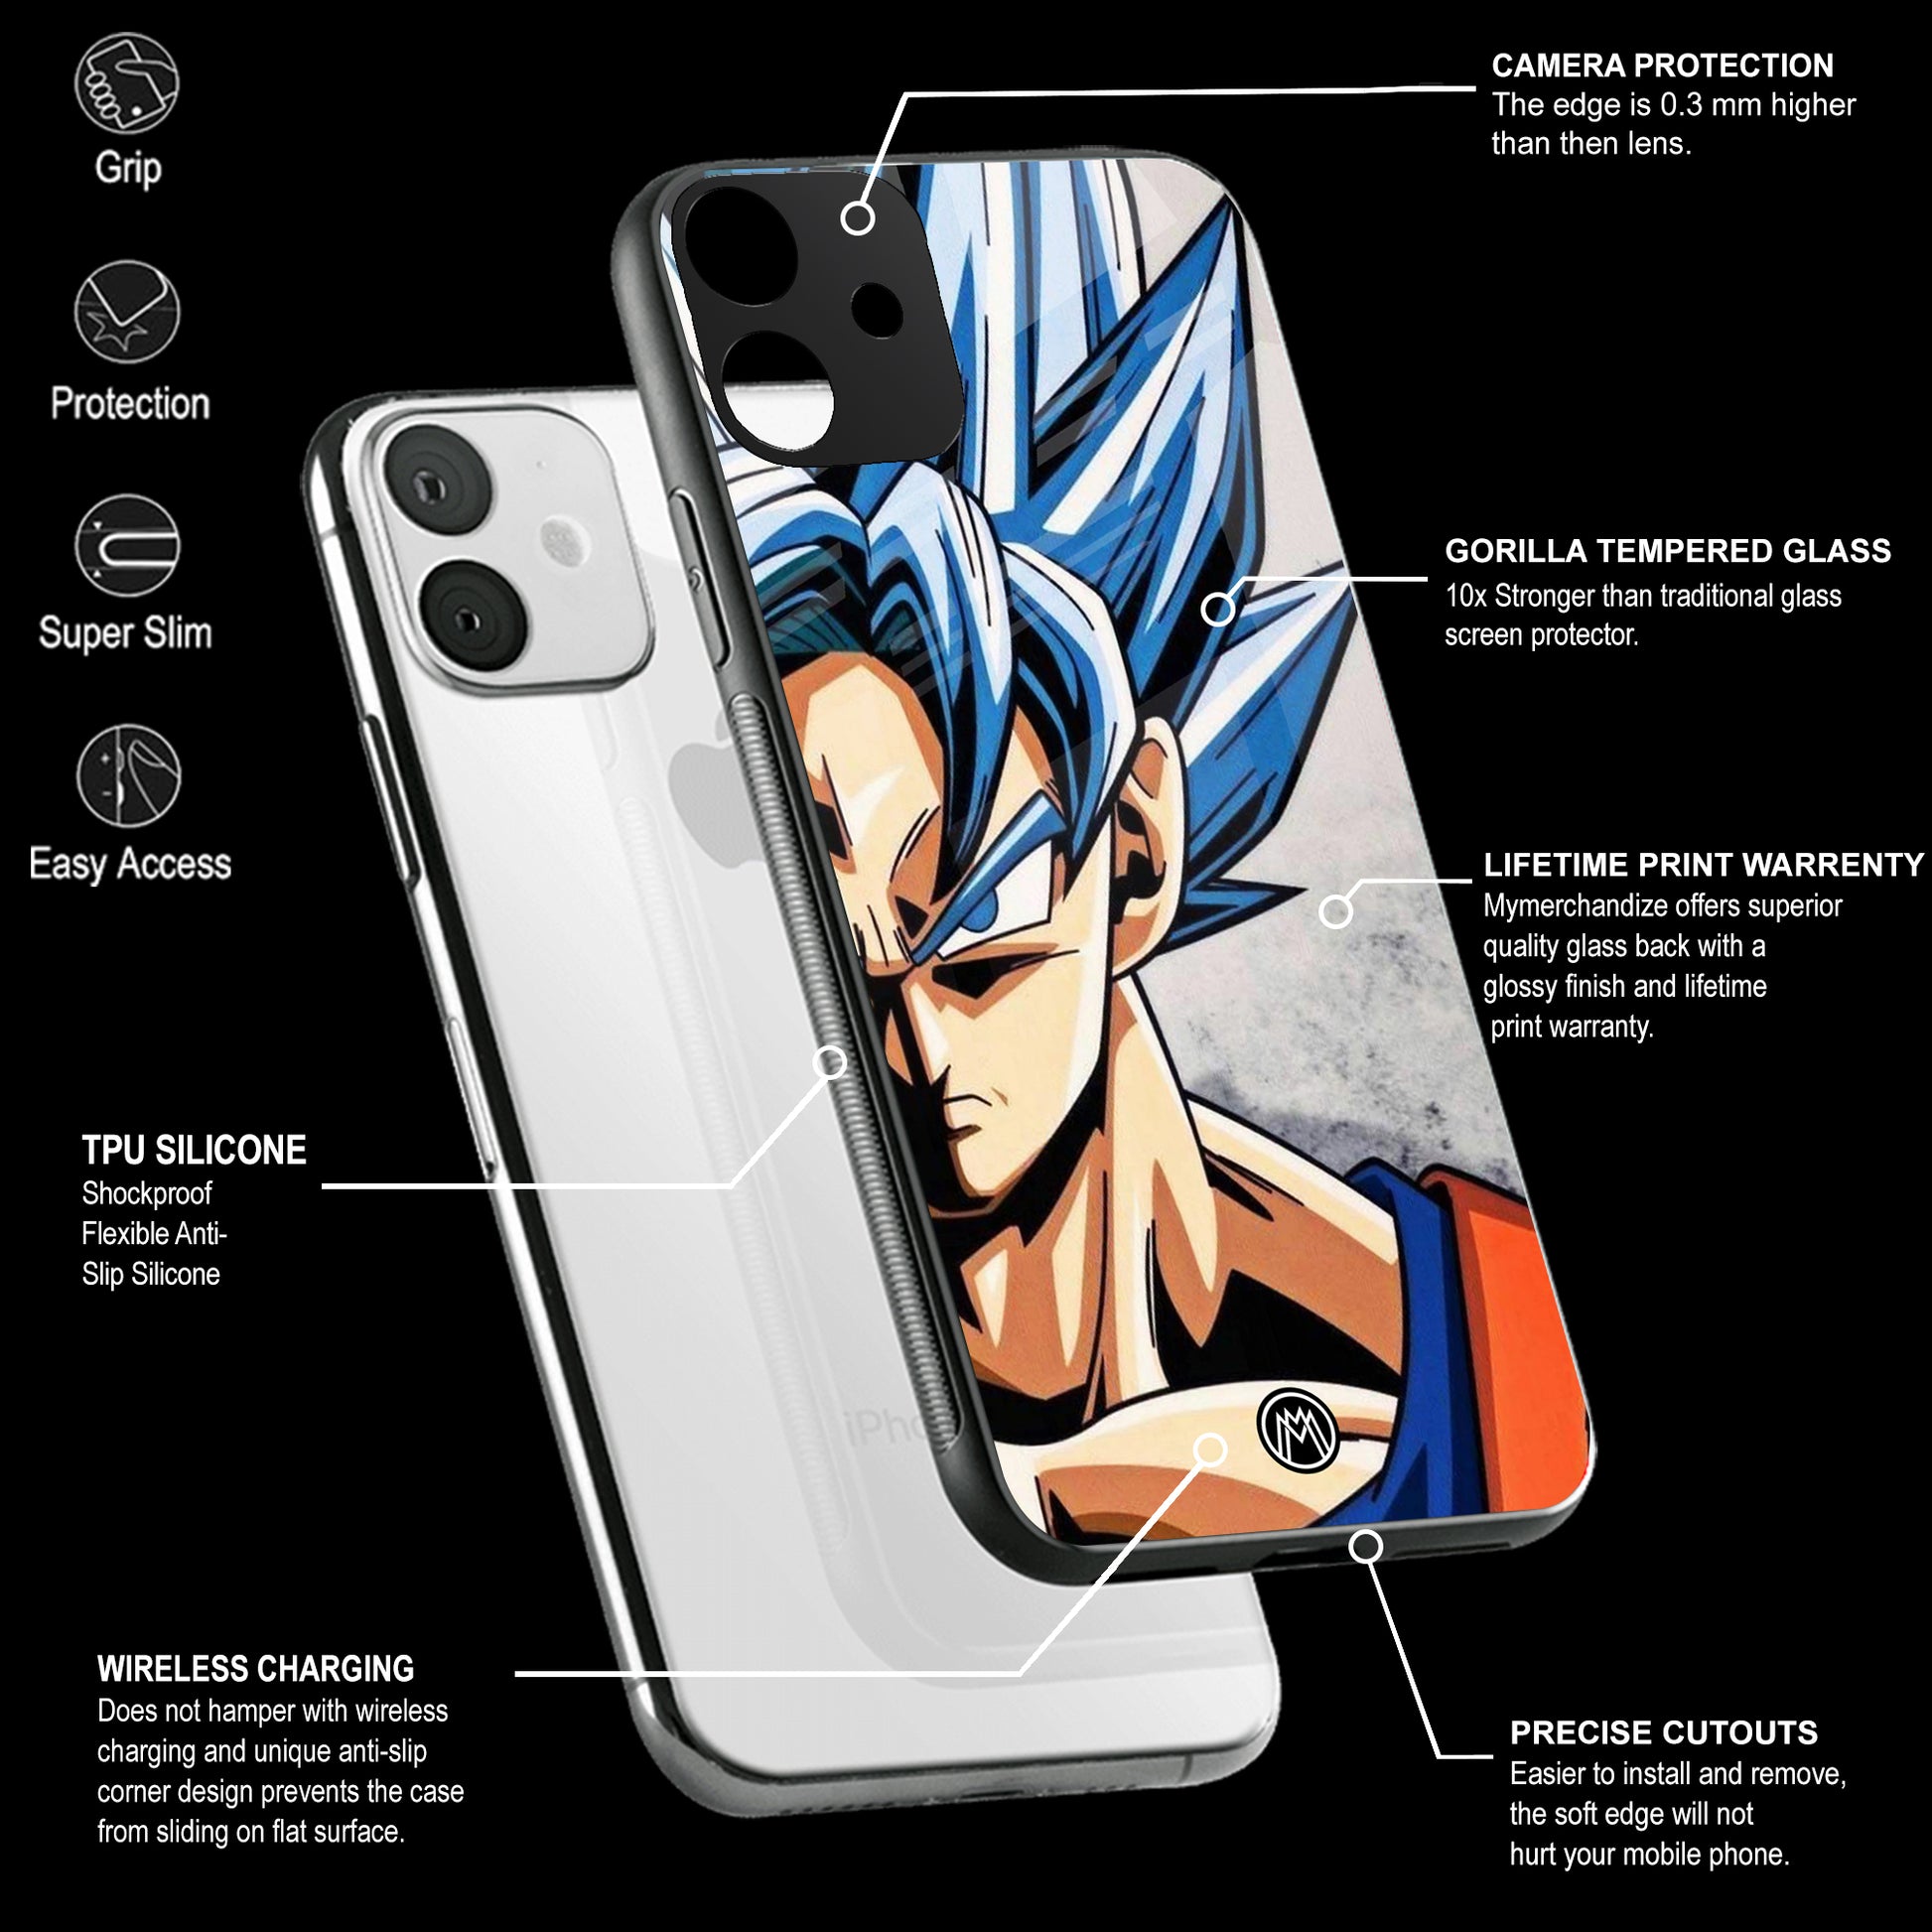 Goku Dragon Ball Z Anime Phone Cover | Glass Case